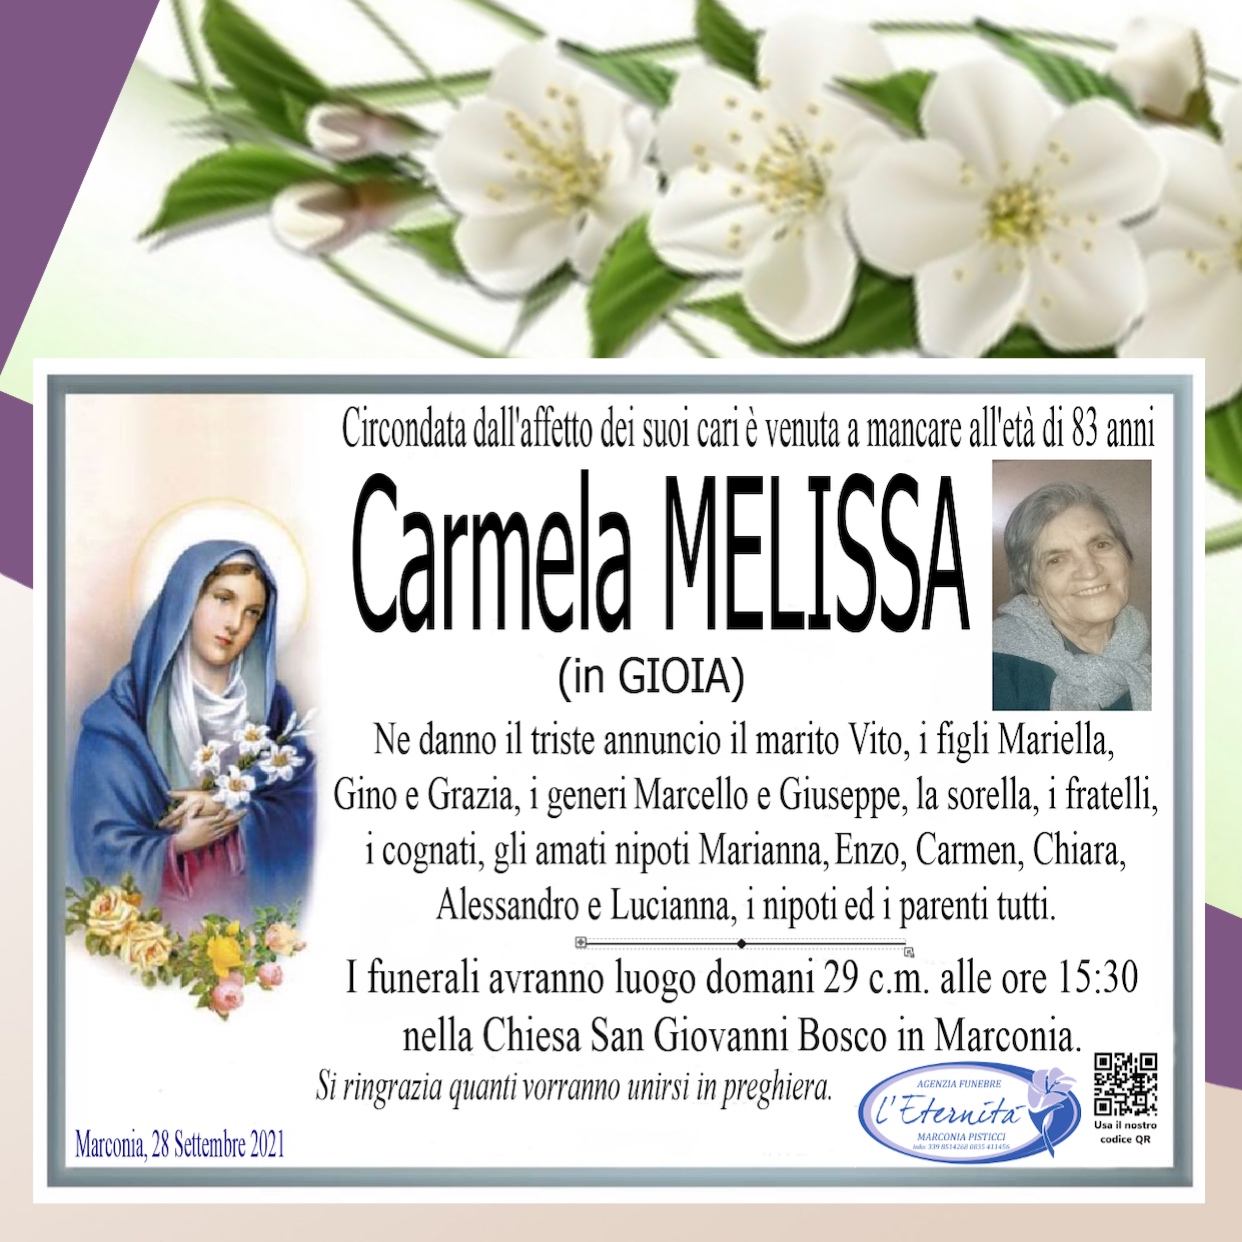 Carmela MELISSA